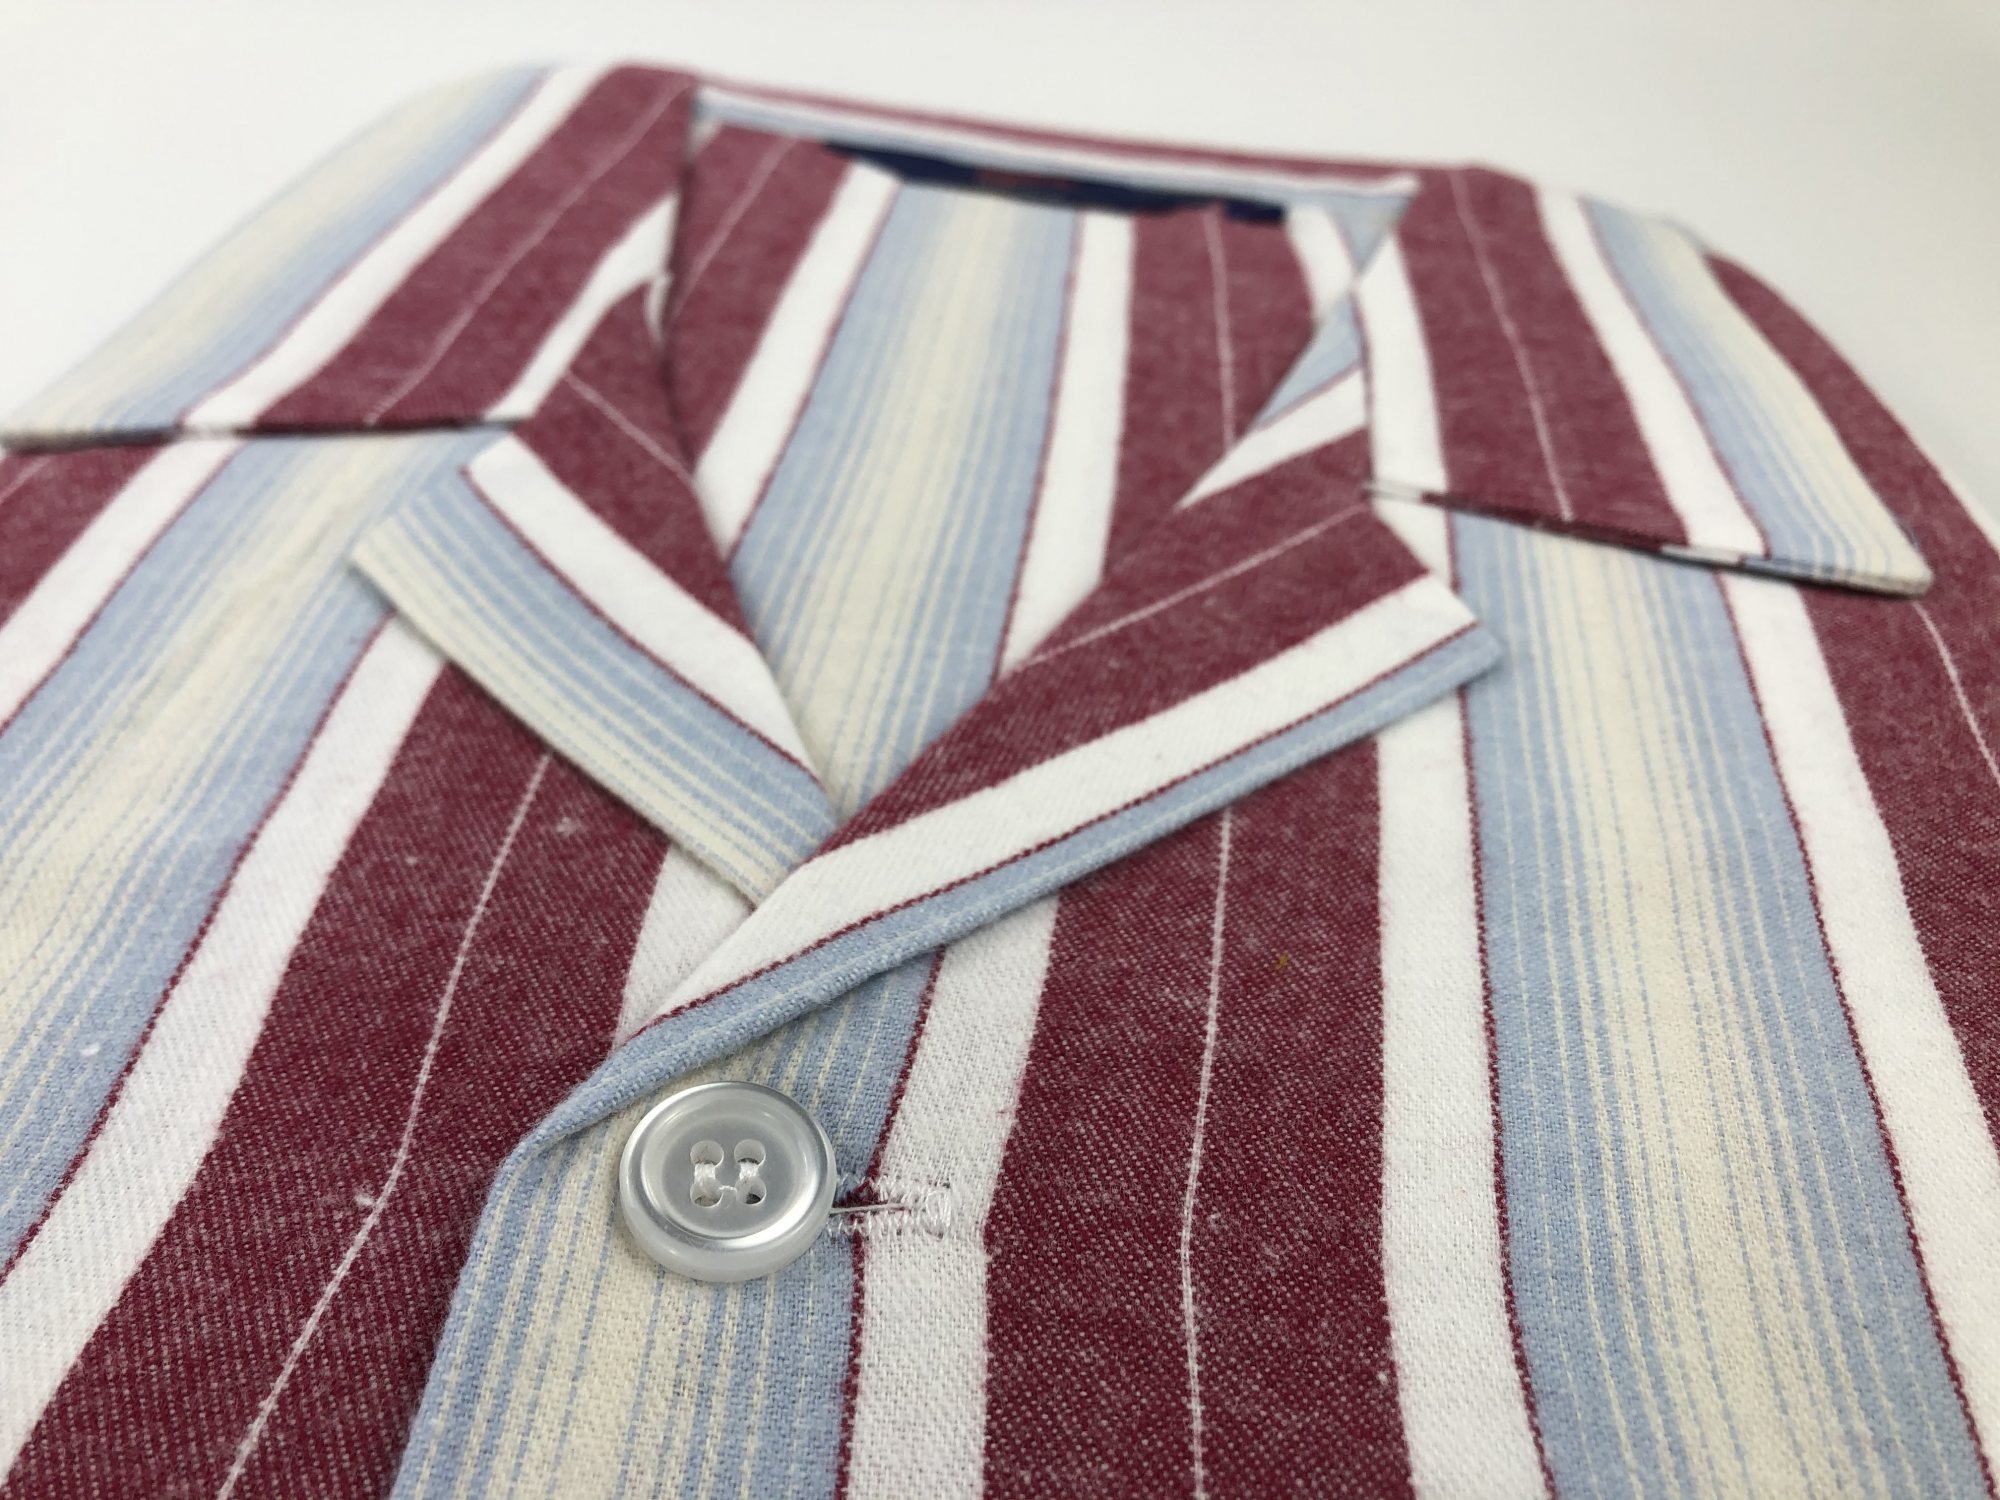 Somax pyjamas | cotton flannelette pyjamas | wincyette pjs - Aidan Sweeney